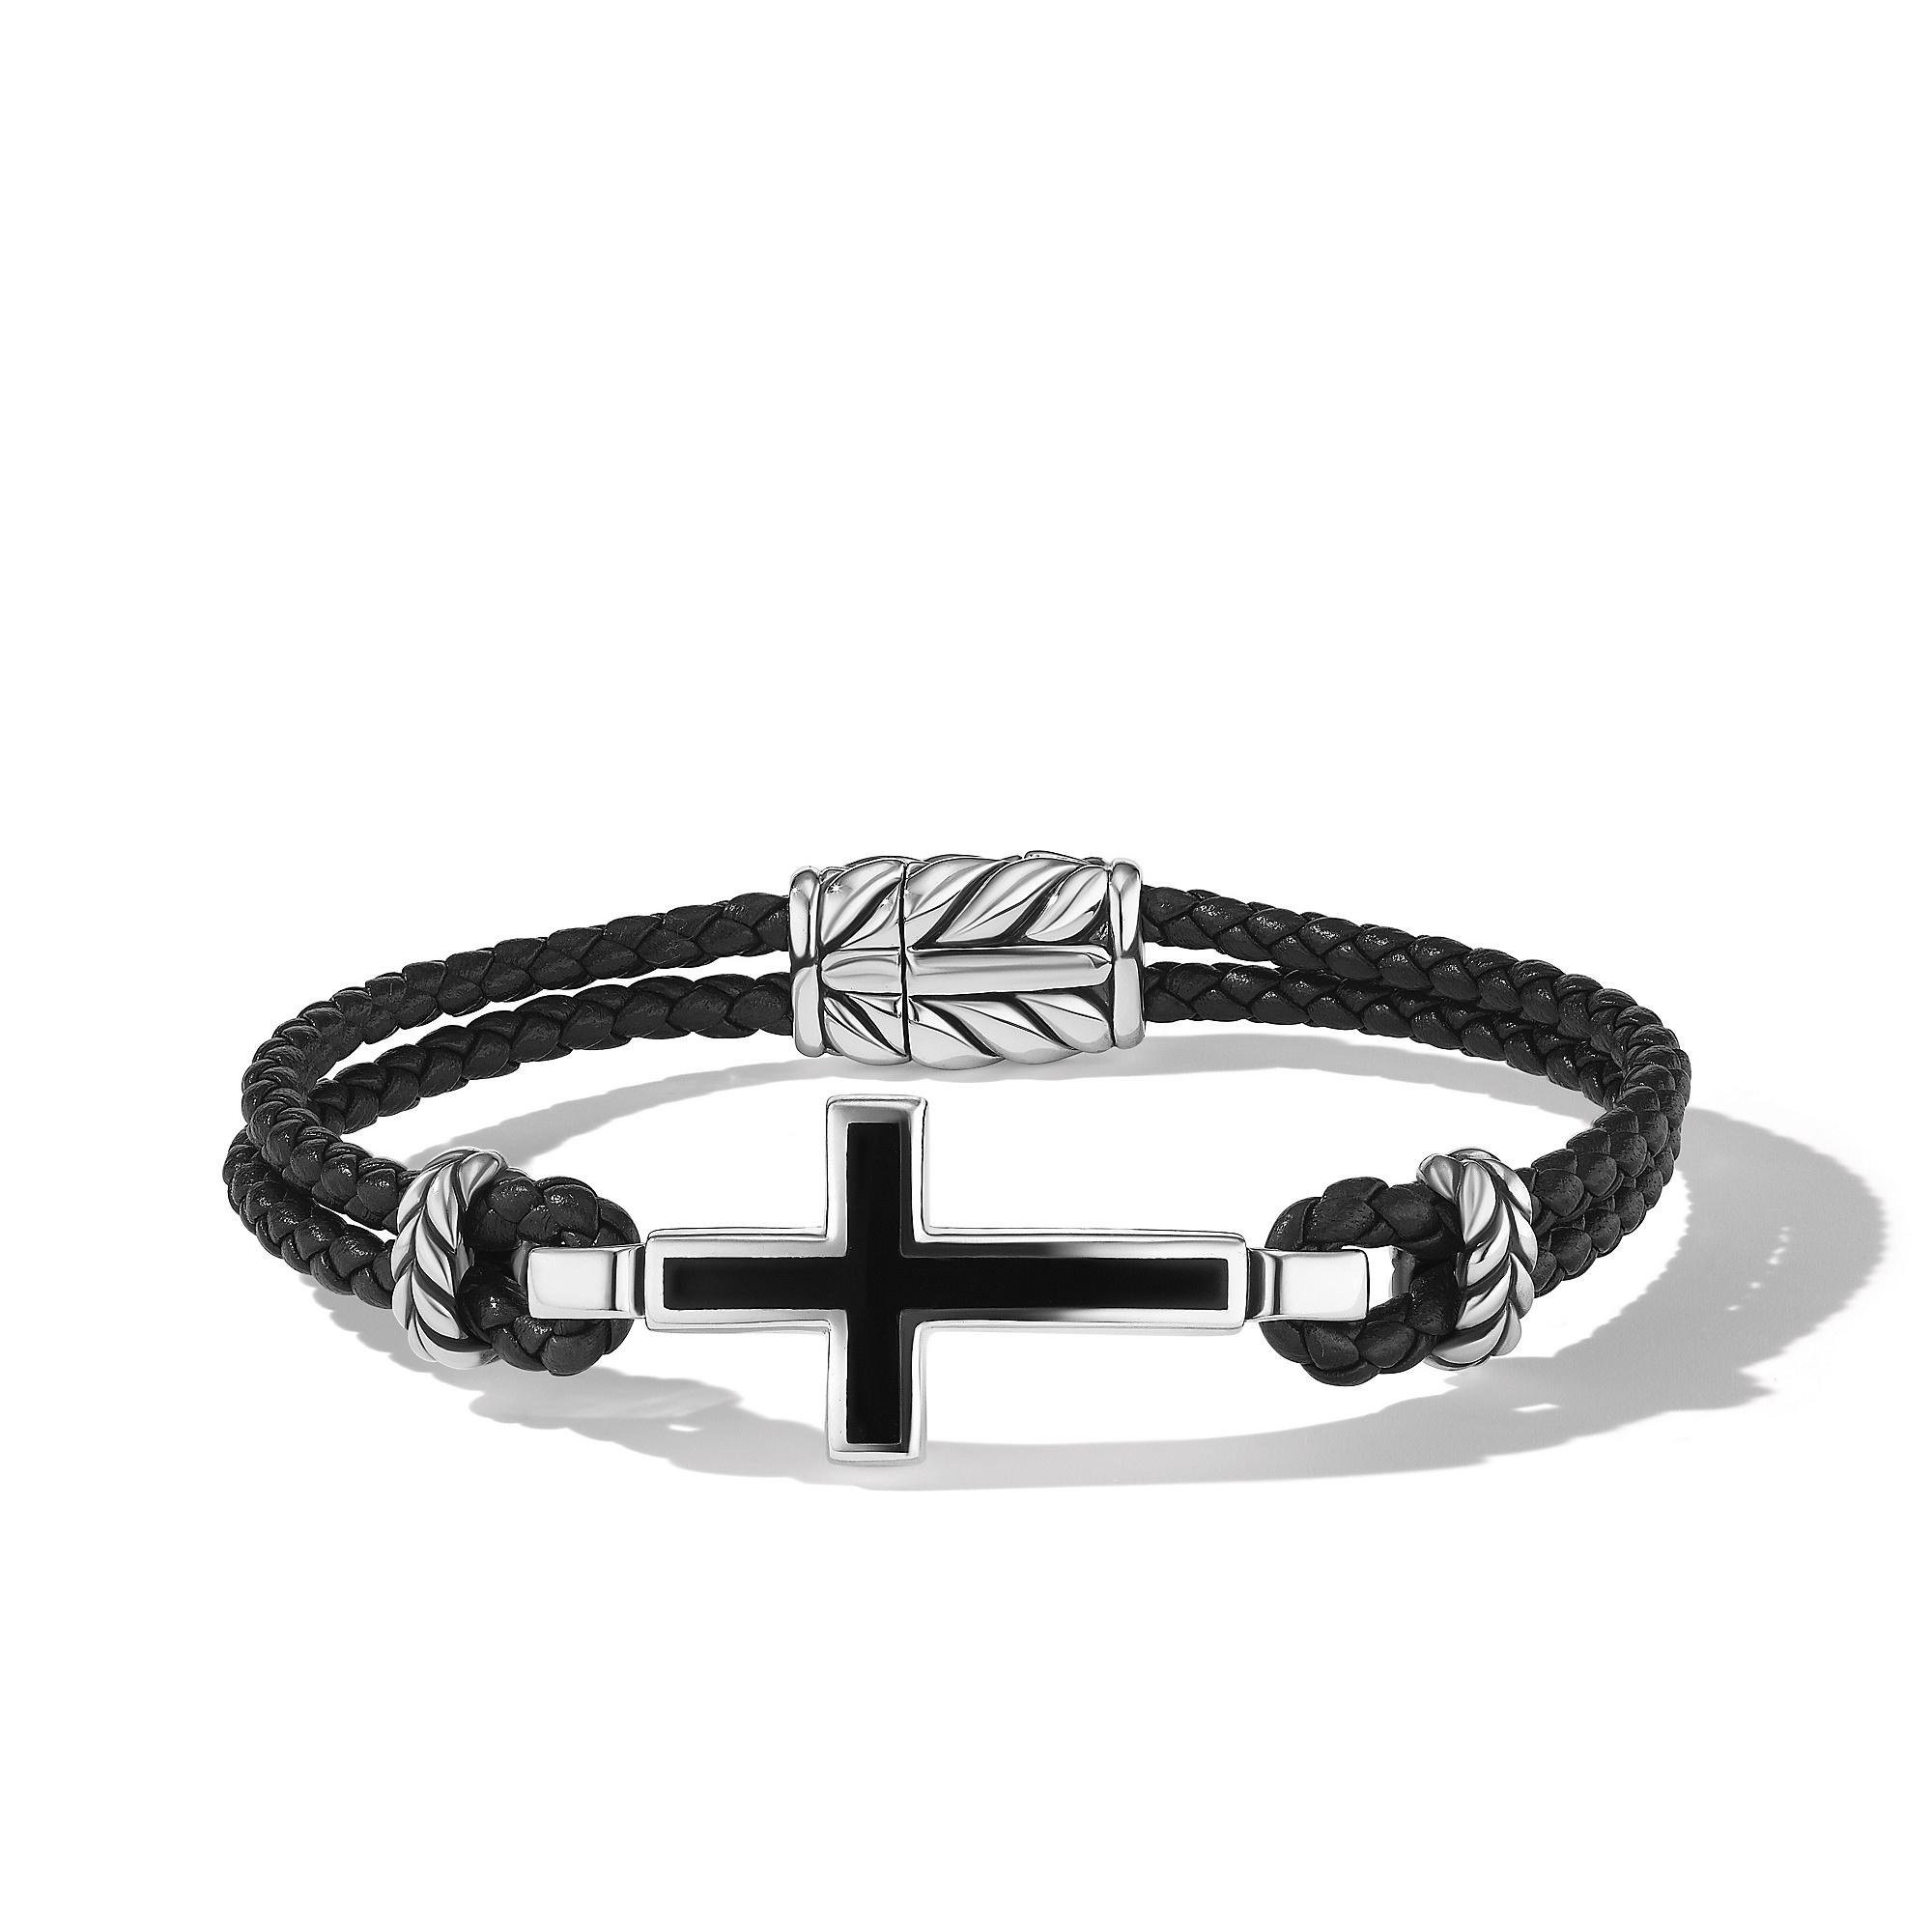 David Yurman Men's Cross Station Leather Bracelet with Black Onyx